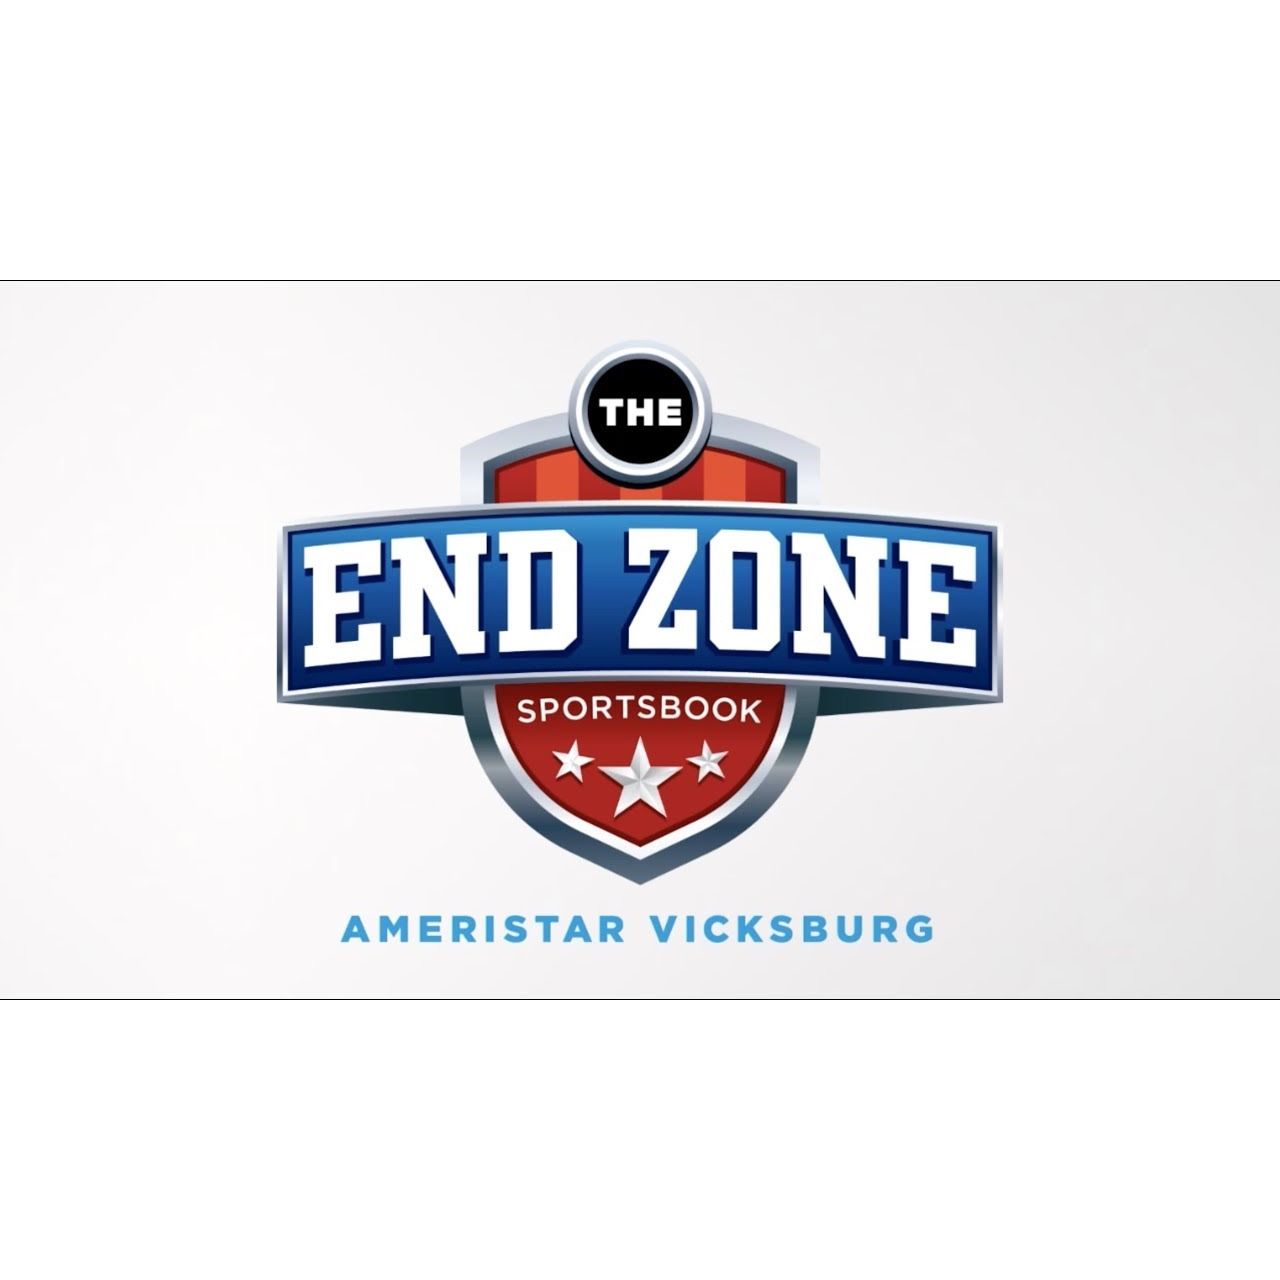 The End Zone - The Sportsbook at Ameristar Vicksburg